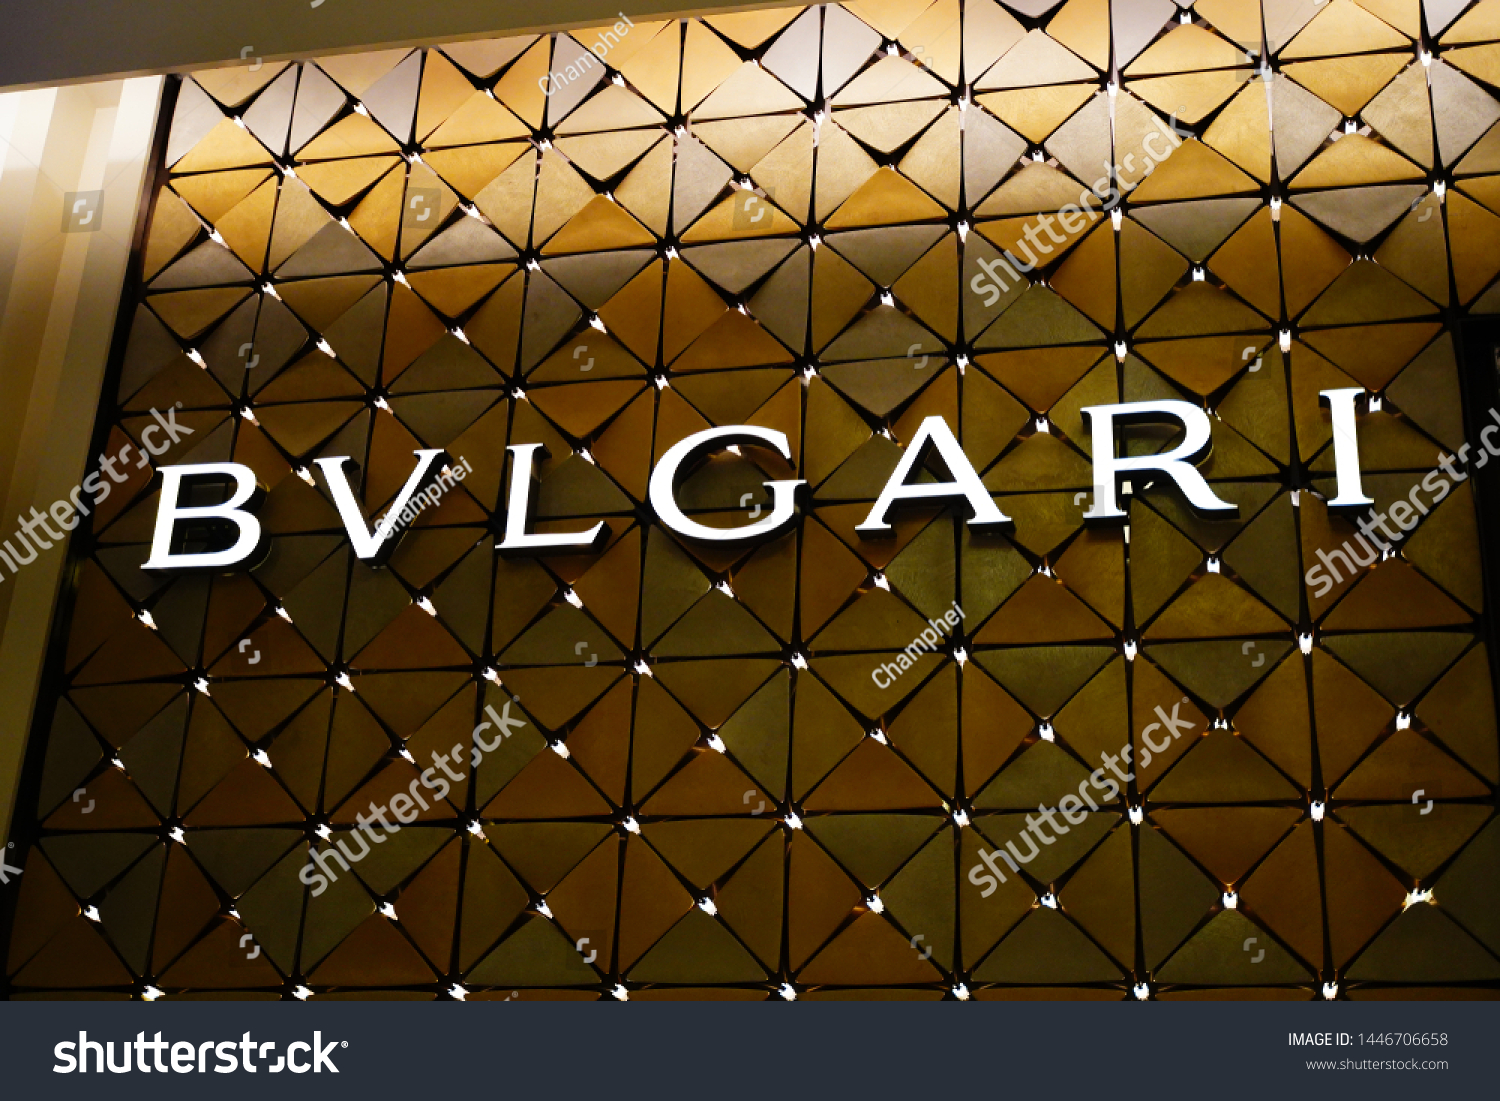 bulgari brand logo